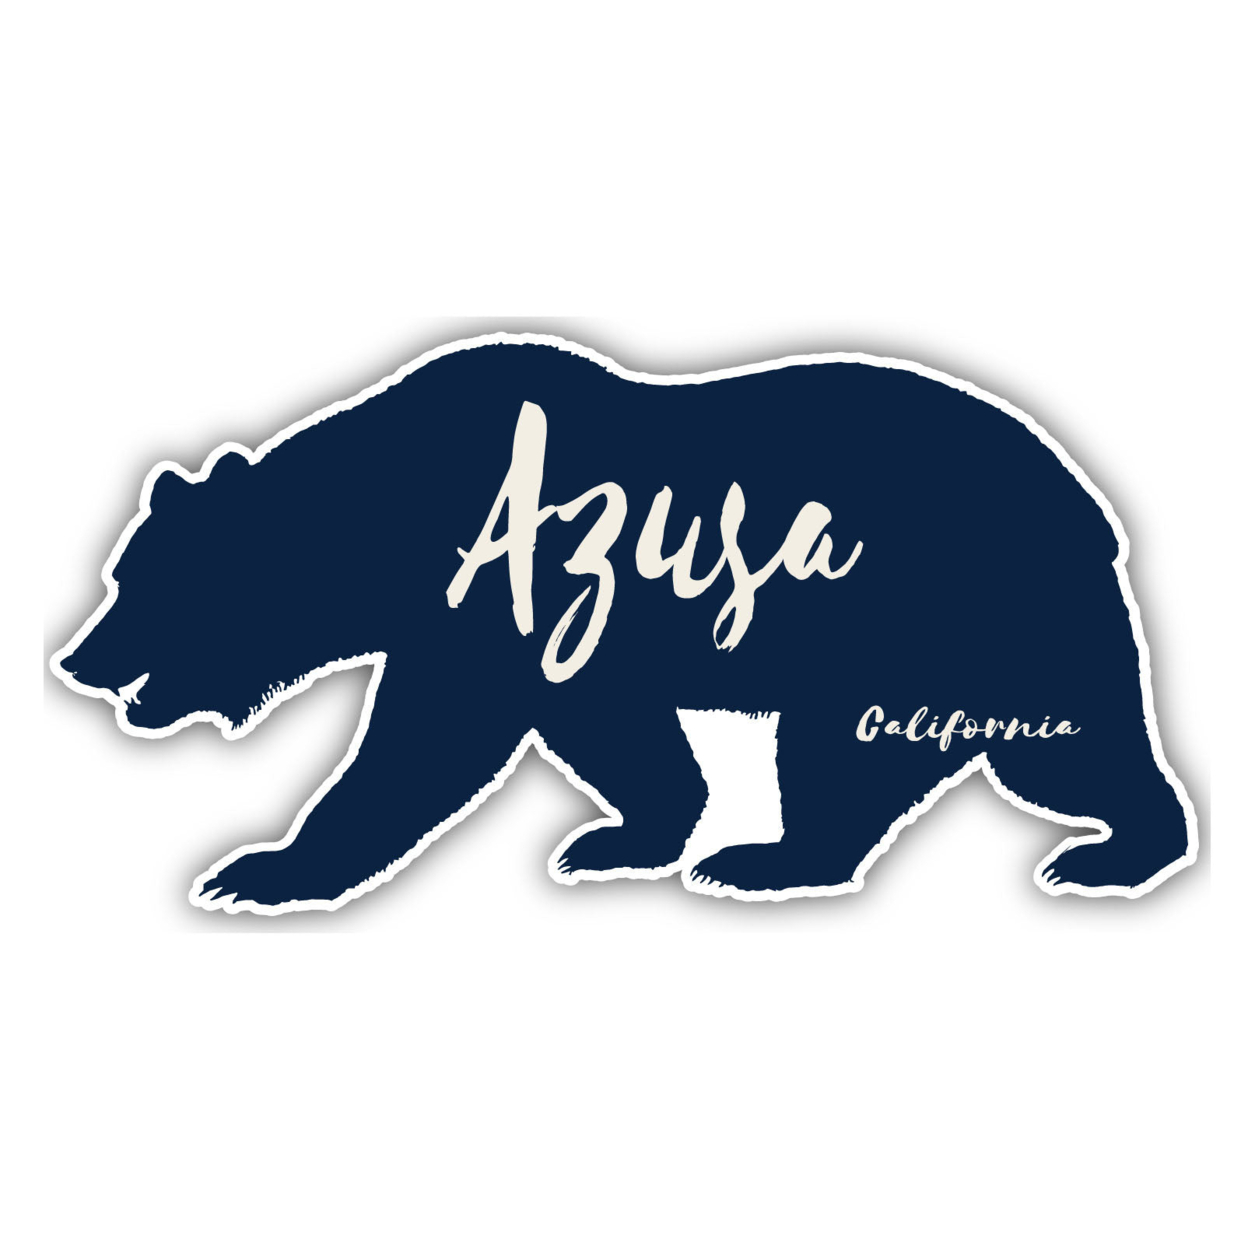 Azusa California Souvenir Decorative Stickers (Choose Theme And Size) - 4-Pack, 6-Inch, Bear